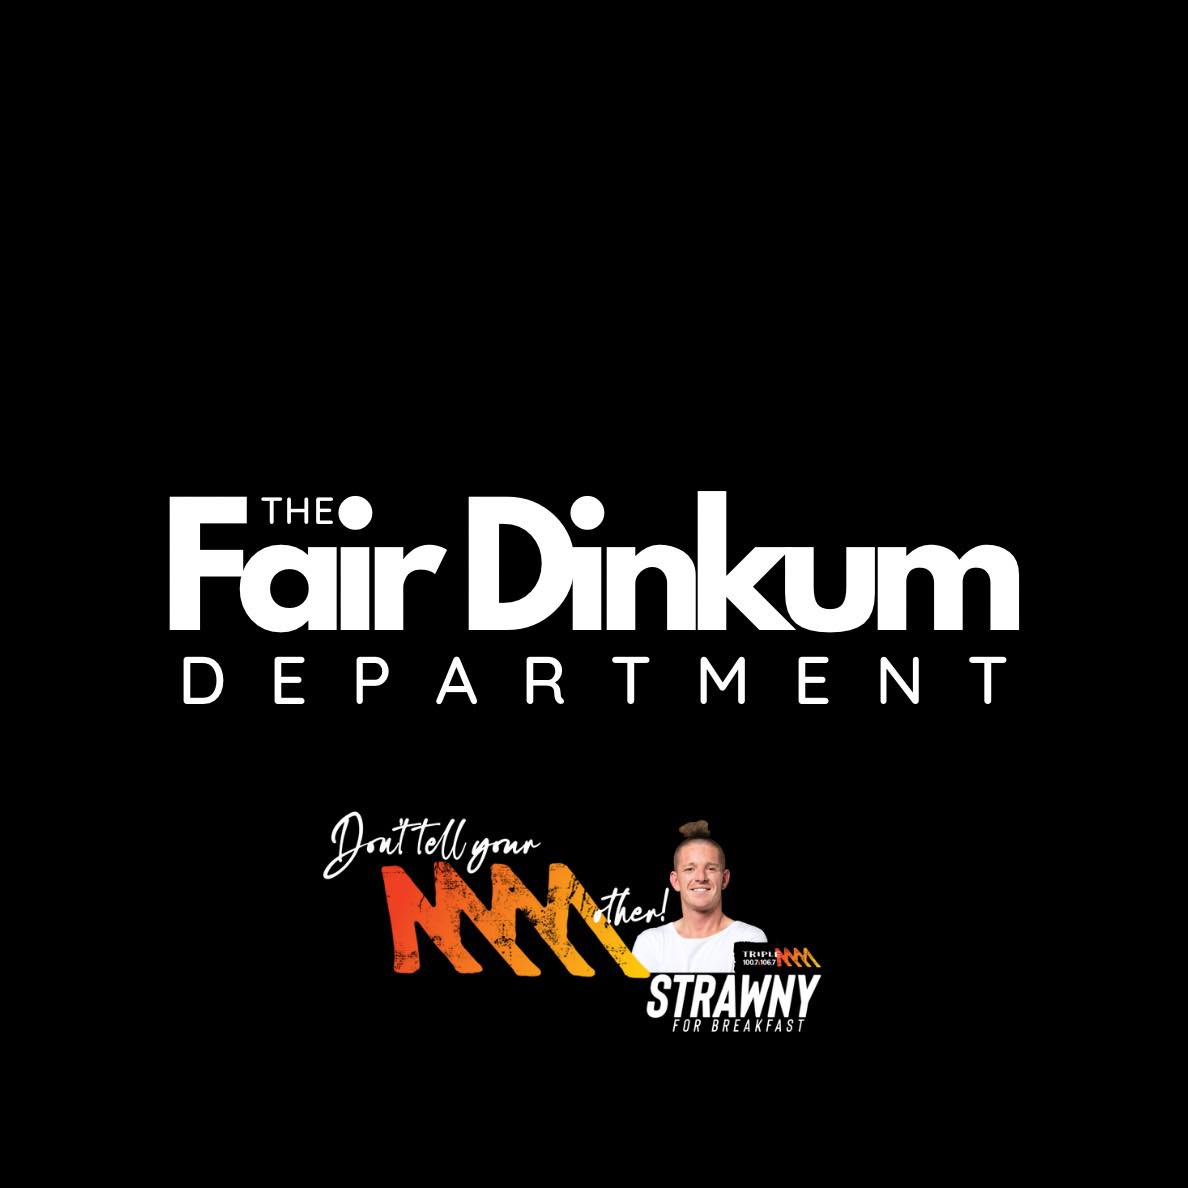 The Fair Dinkum Dept with Kel & Di from Lifeline Mid Coast - Thursday April 11